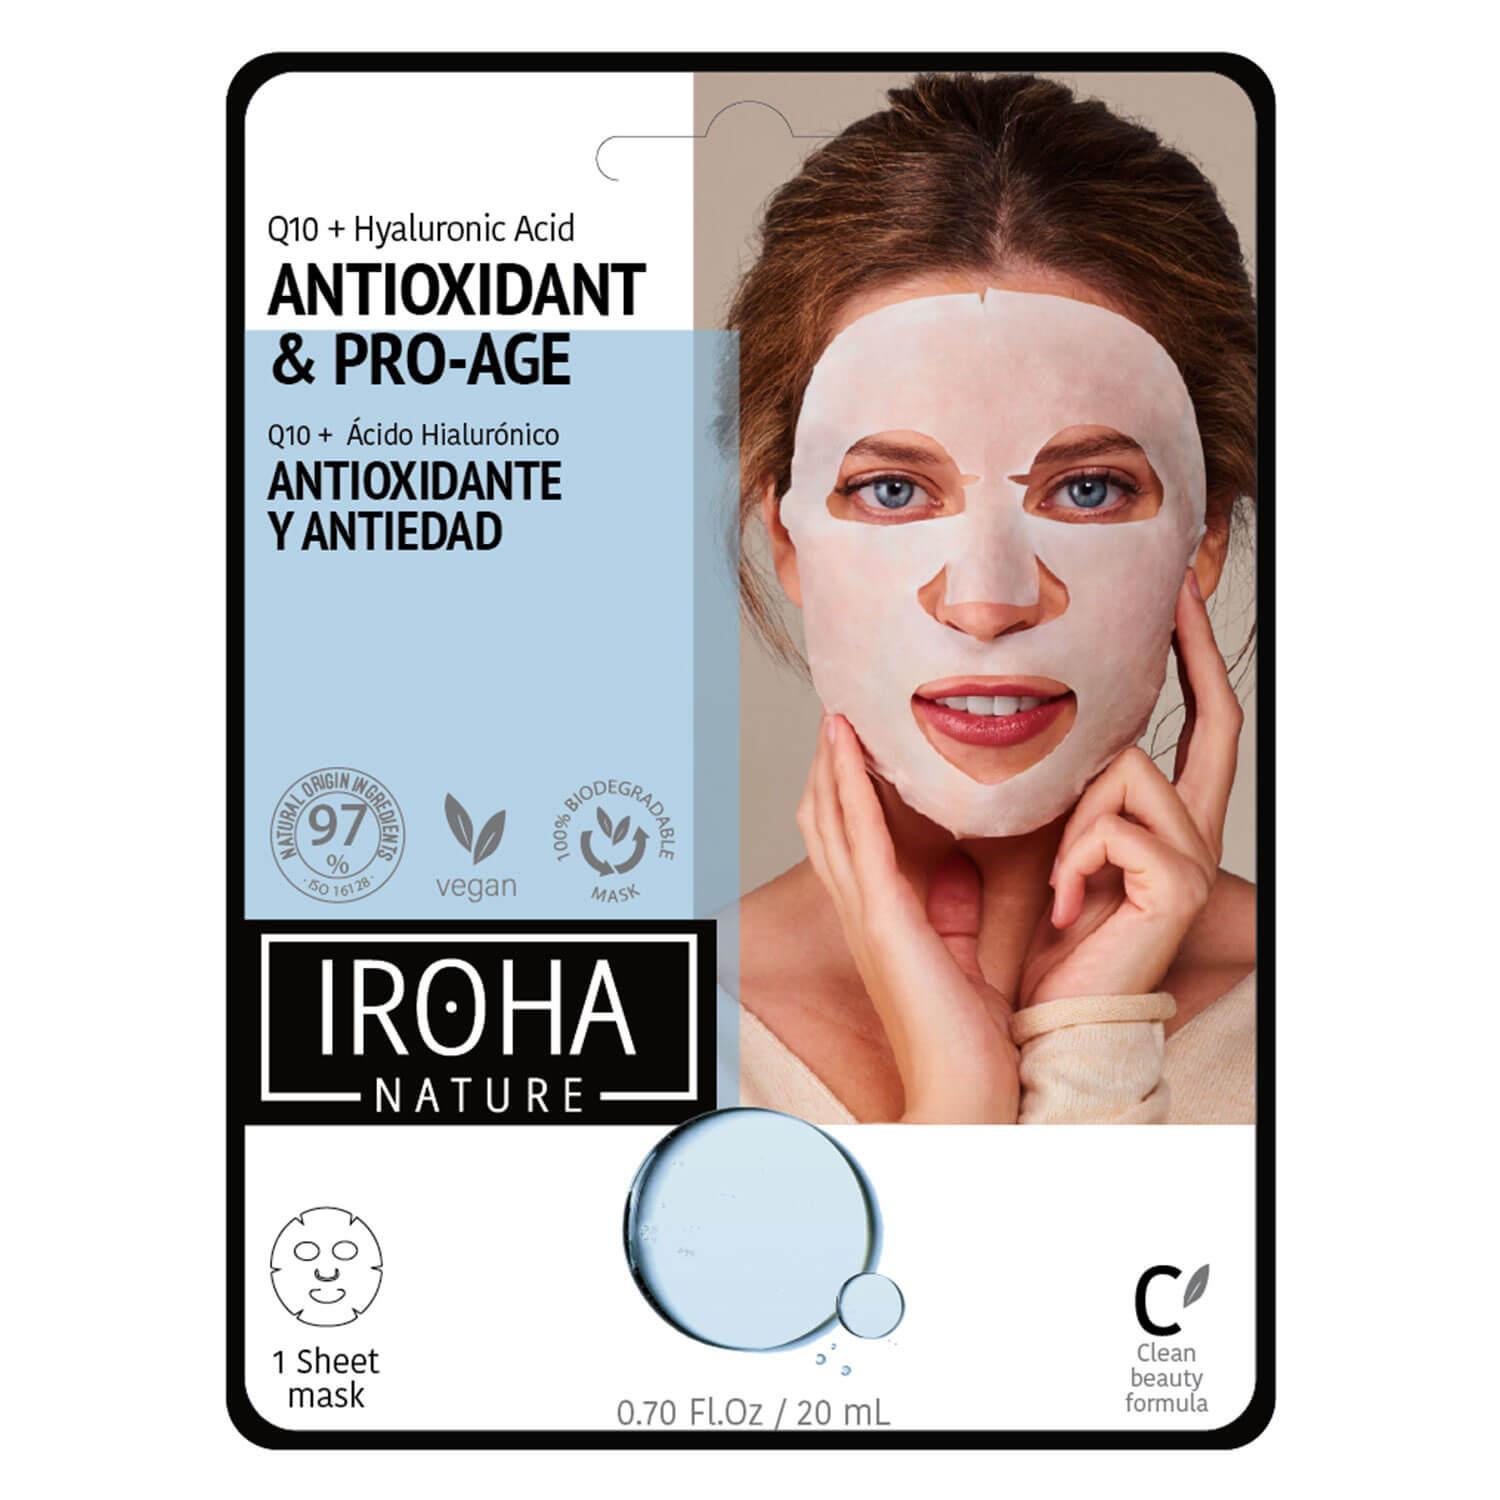 Iroha Nature - Antioxidant & Pro-Age Sheet Mask